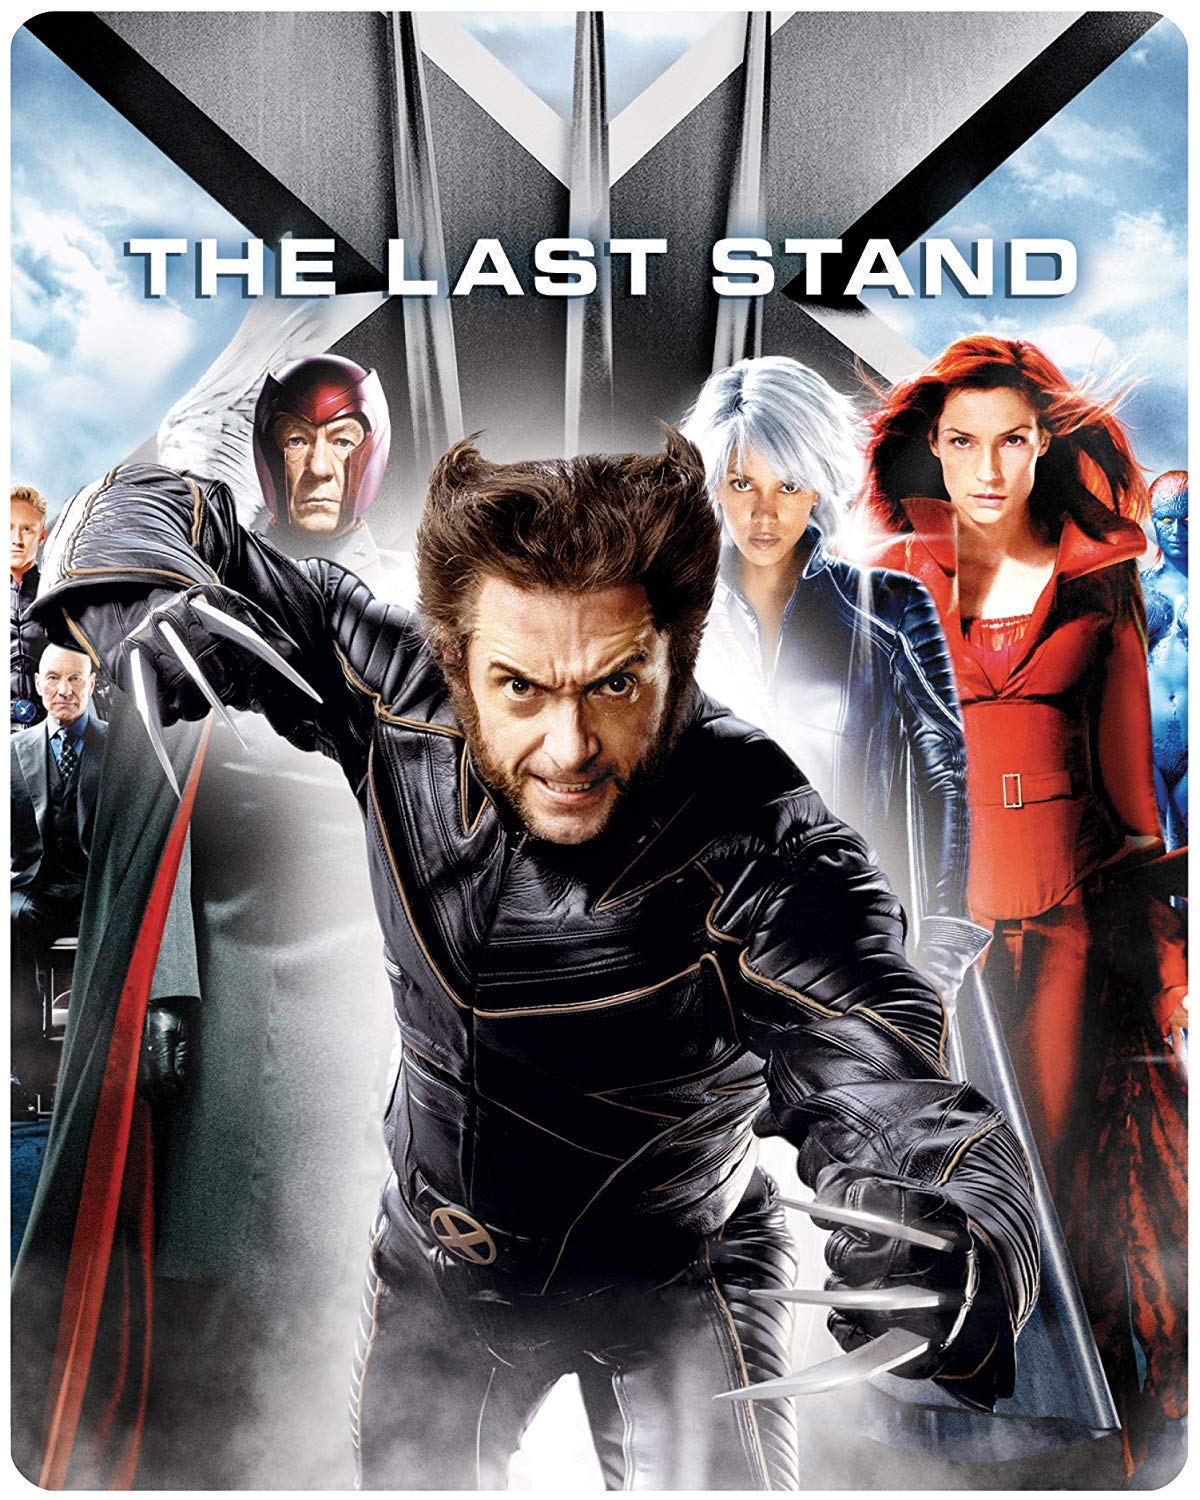 x-men-the-last-stand-steelbook-movie-purchase-or-watch-online